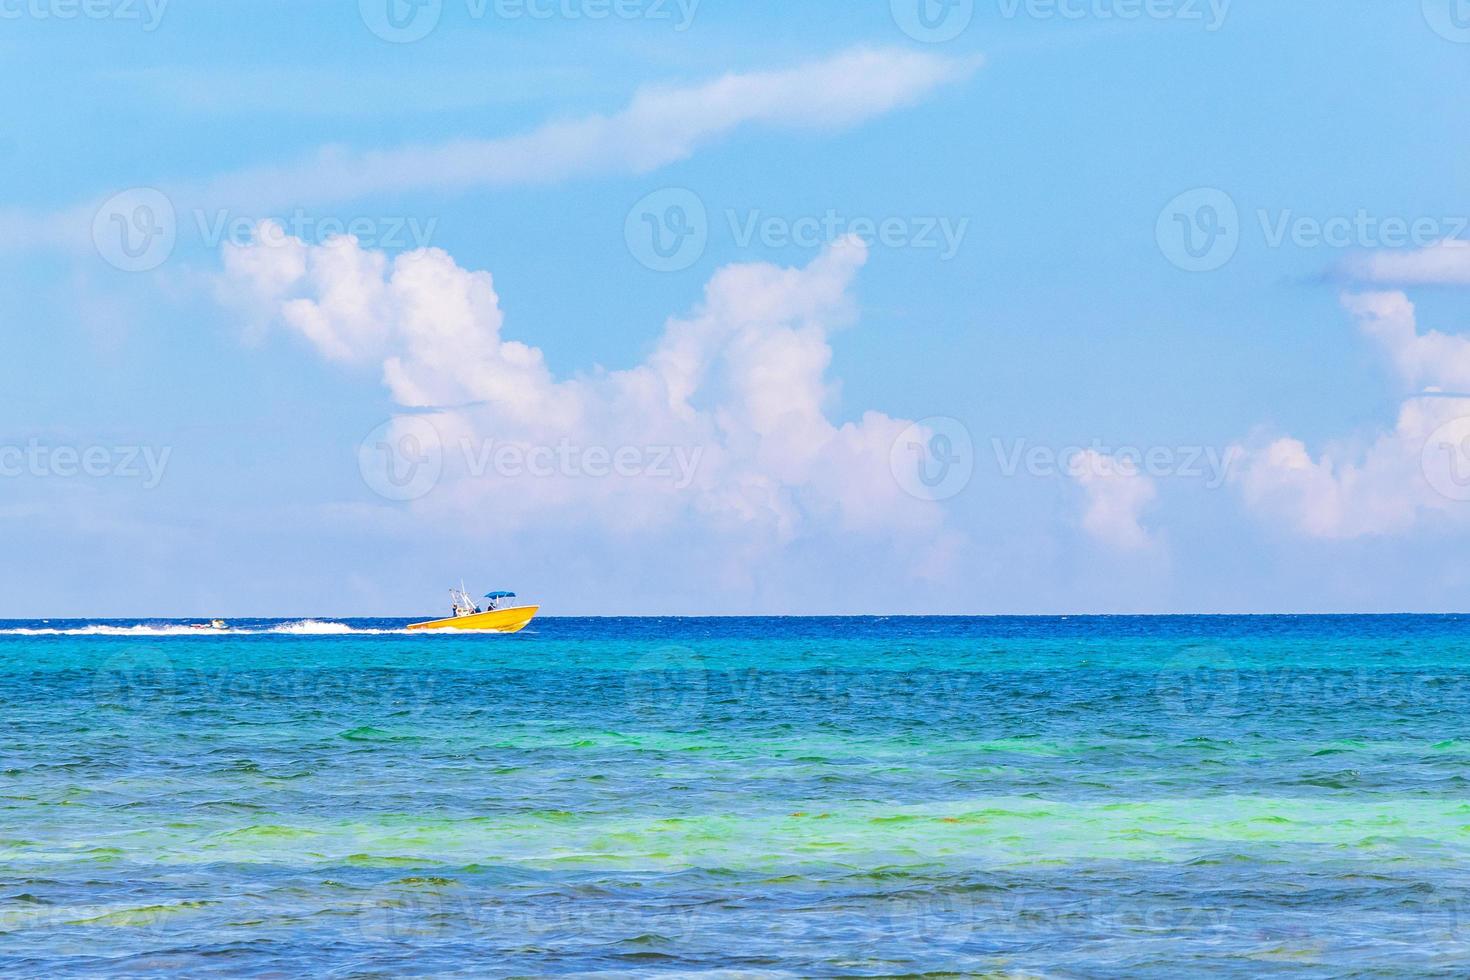 barcos iates navio jetty beach em playa del carmen méxico. foto